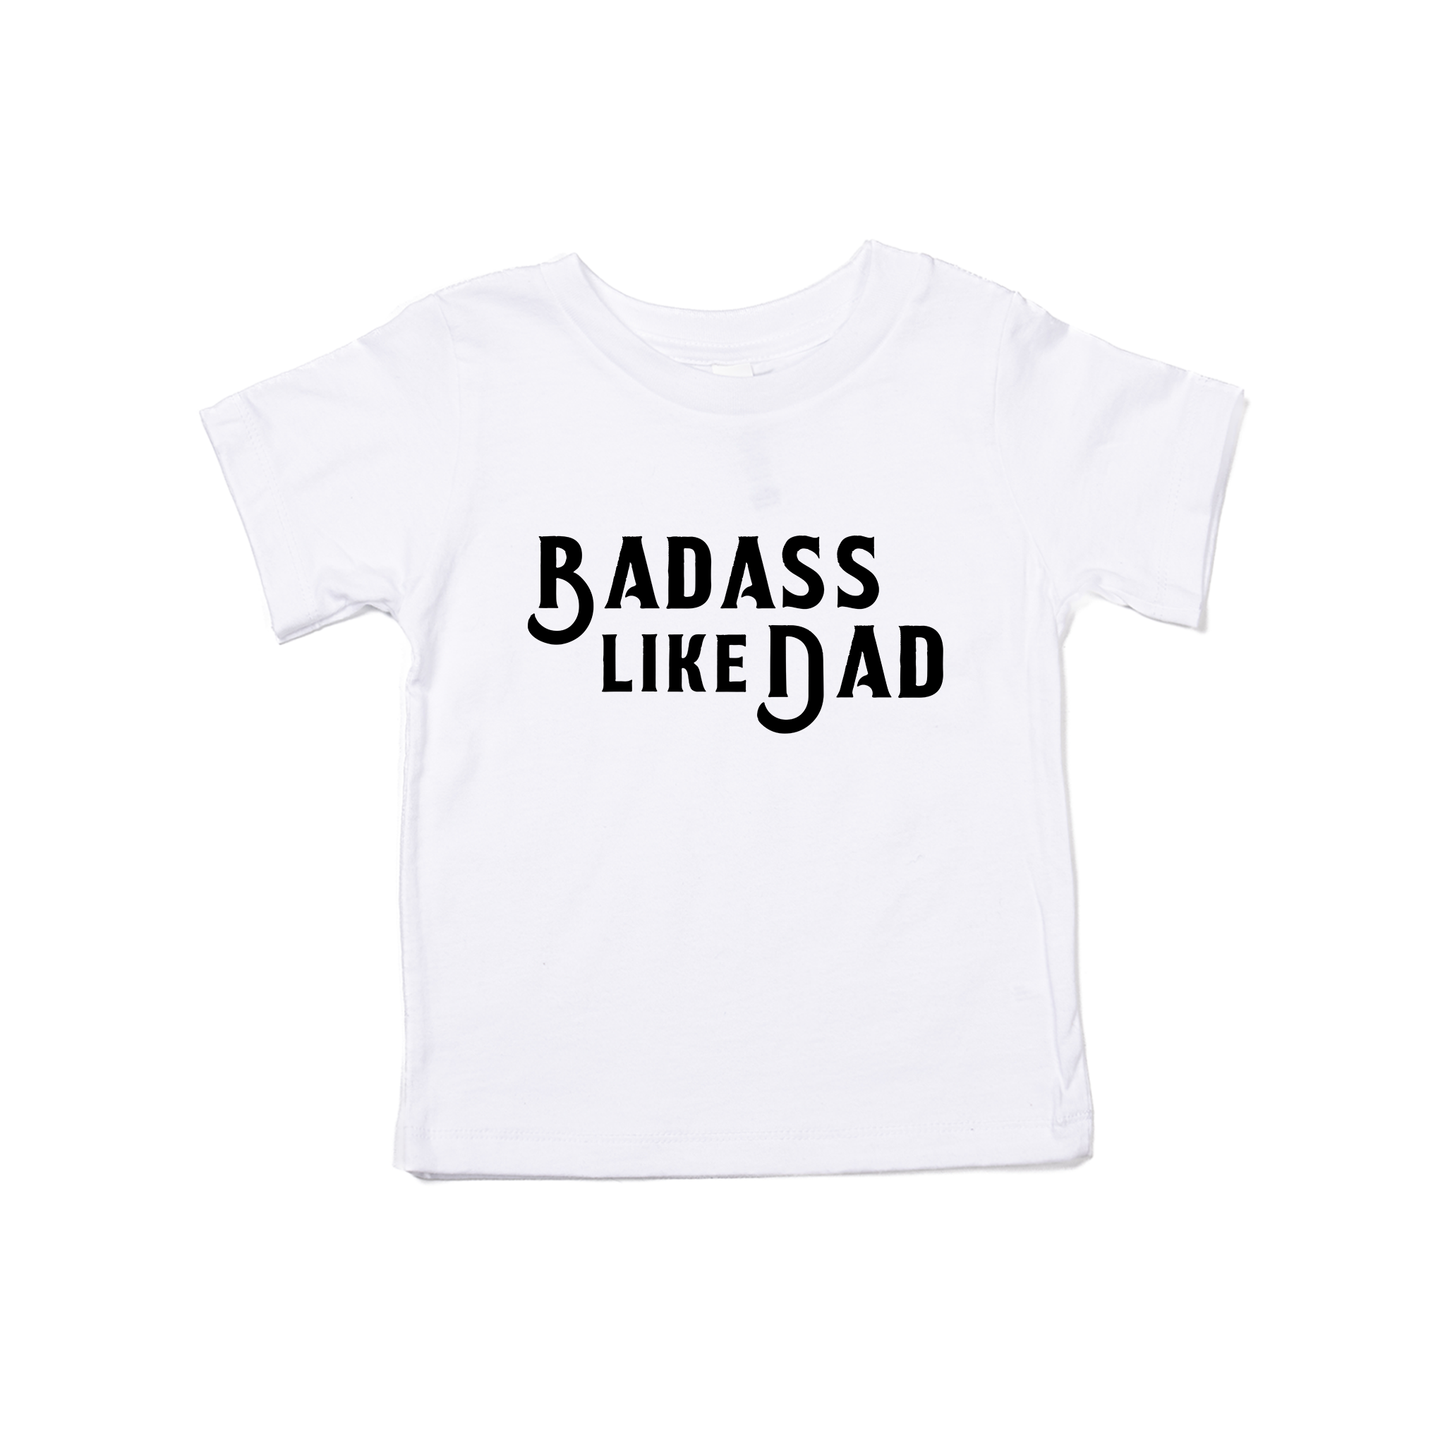 Badass Like Dad (Black) - Kids Tee (White)